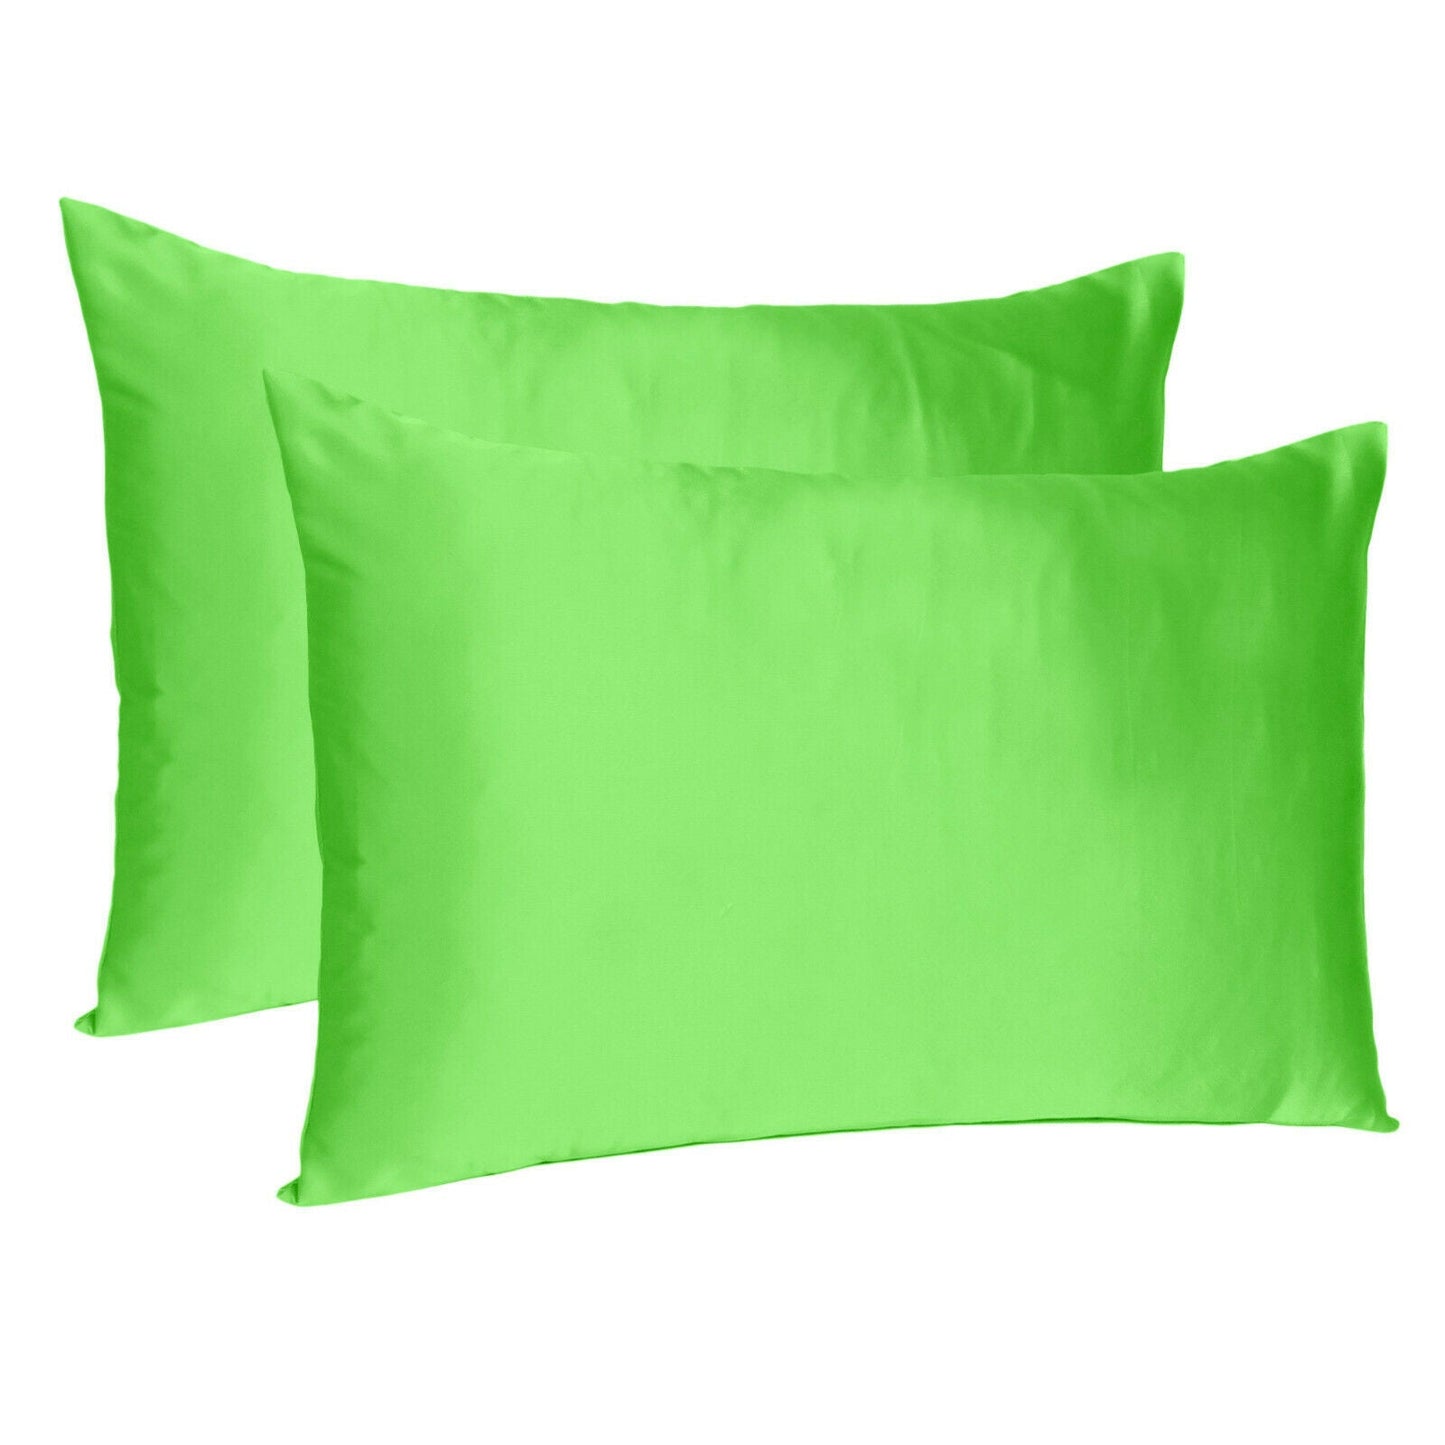 Luxury Soft Plain Satin Silk Pillowcases in Set of 2 - Summer Green